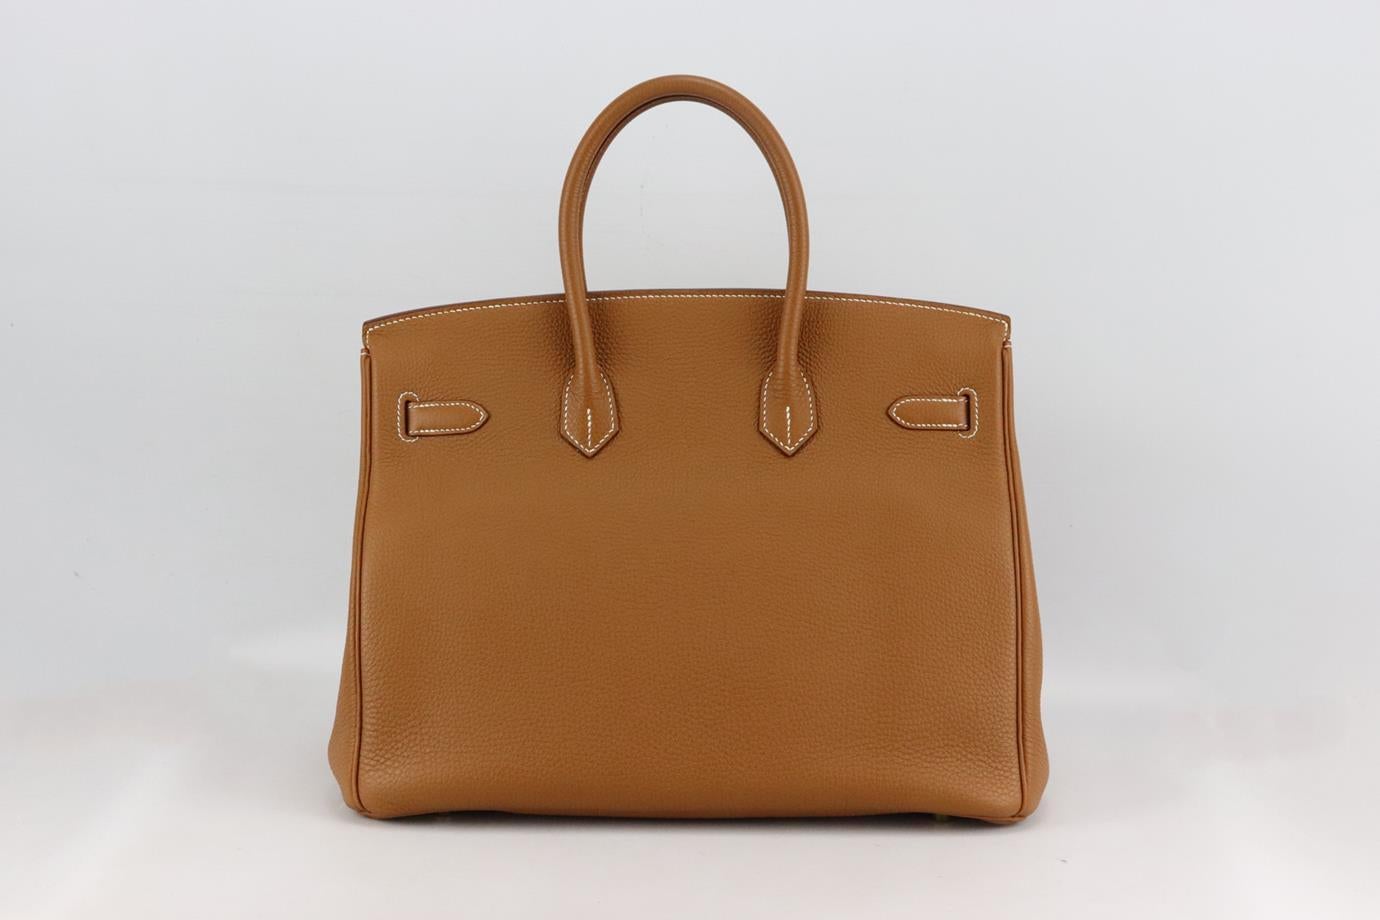 Hermès 2011 Birkin 35cm Togo Leather Bag In Excellent Condition In London, GB